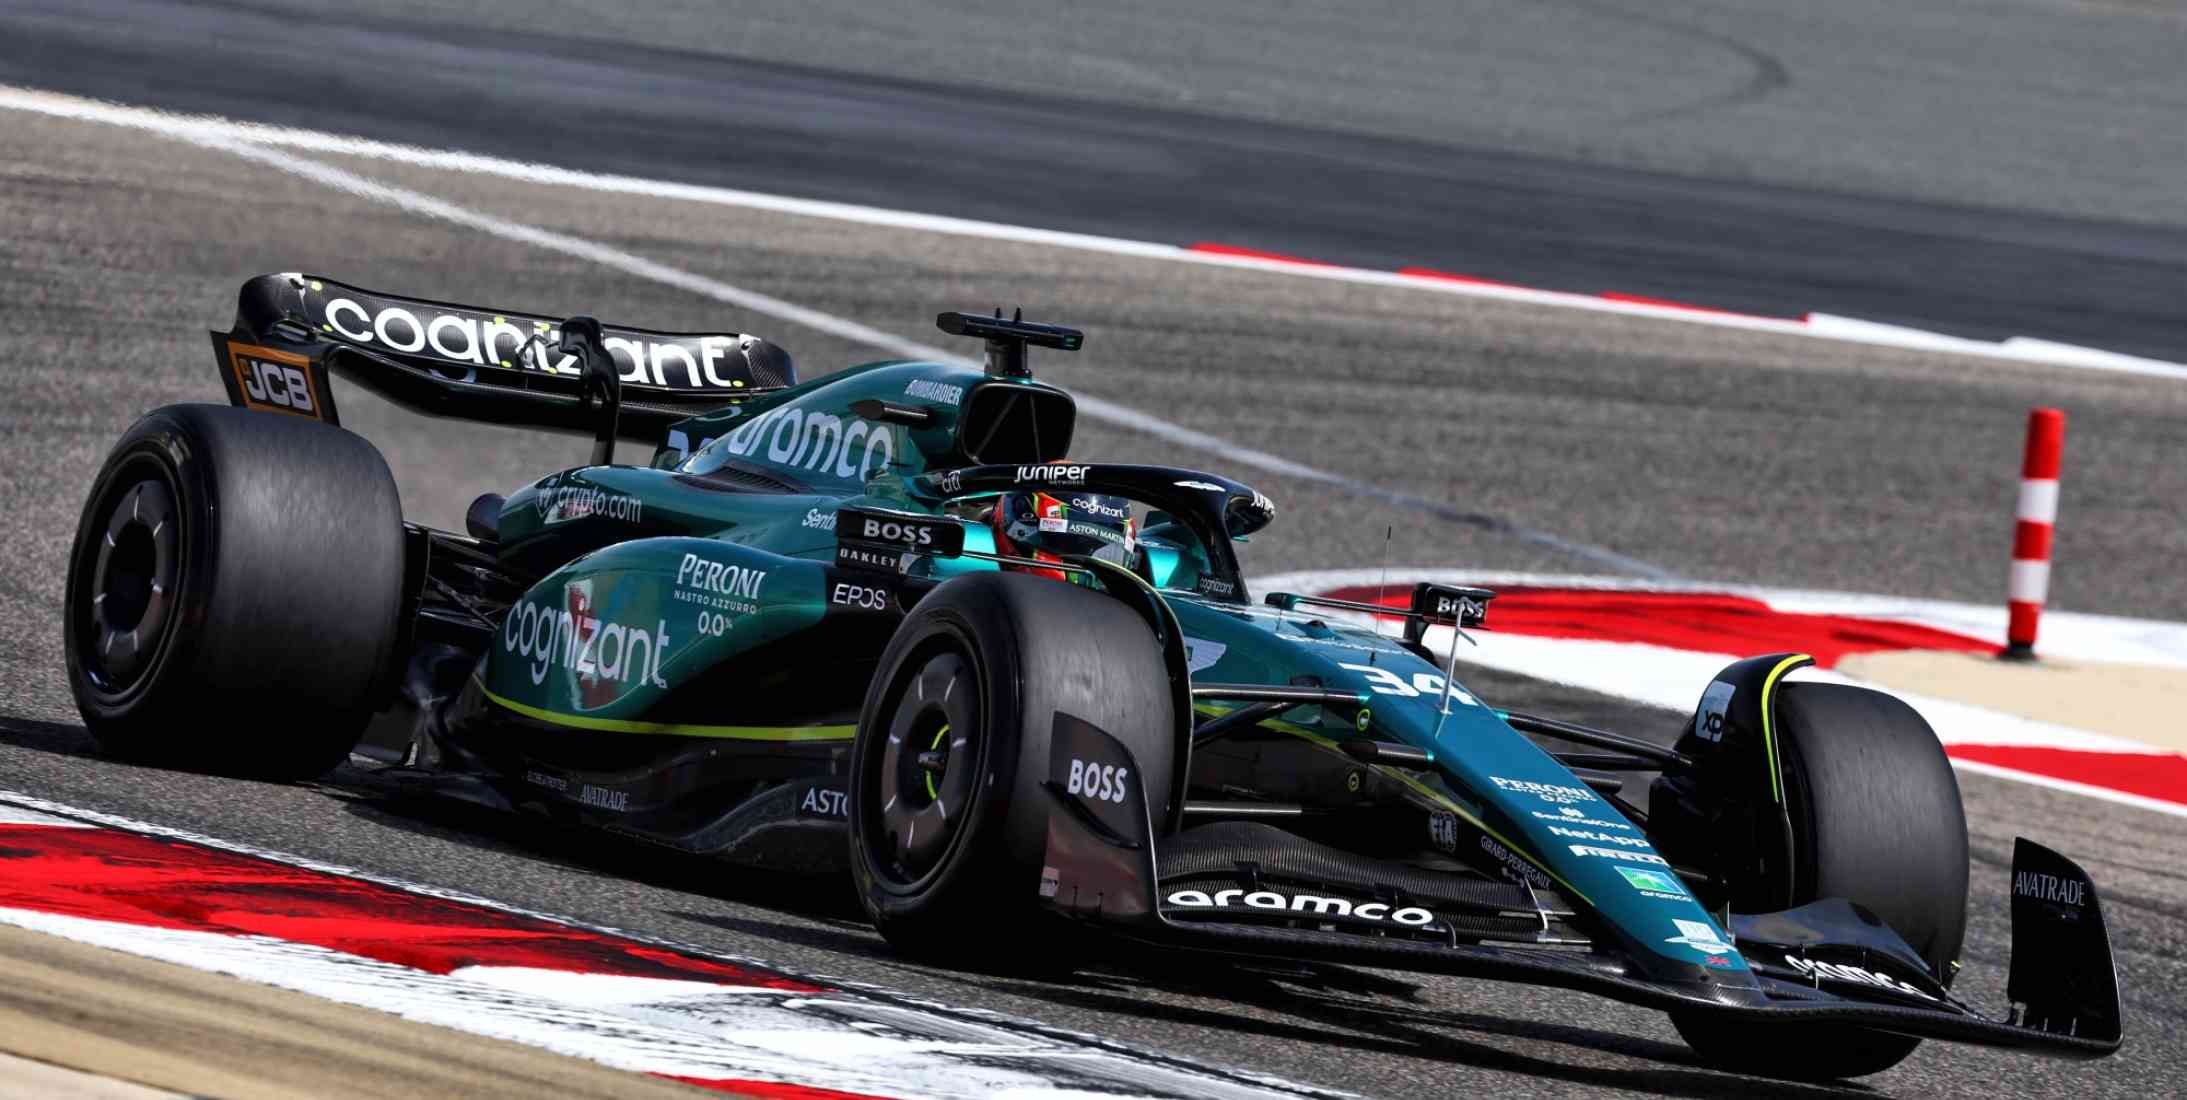 Felipe drugovich racingnews365